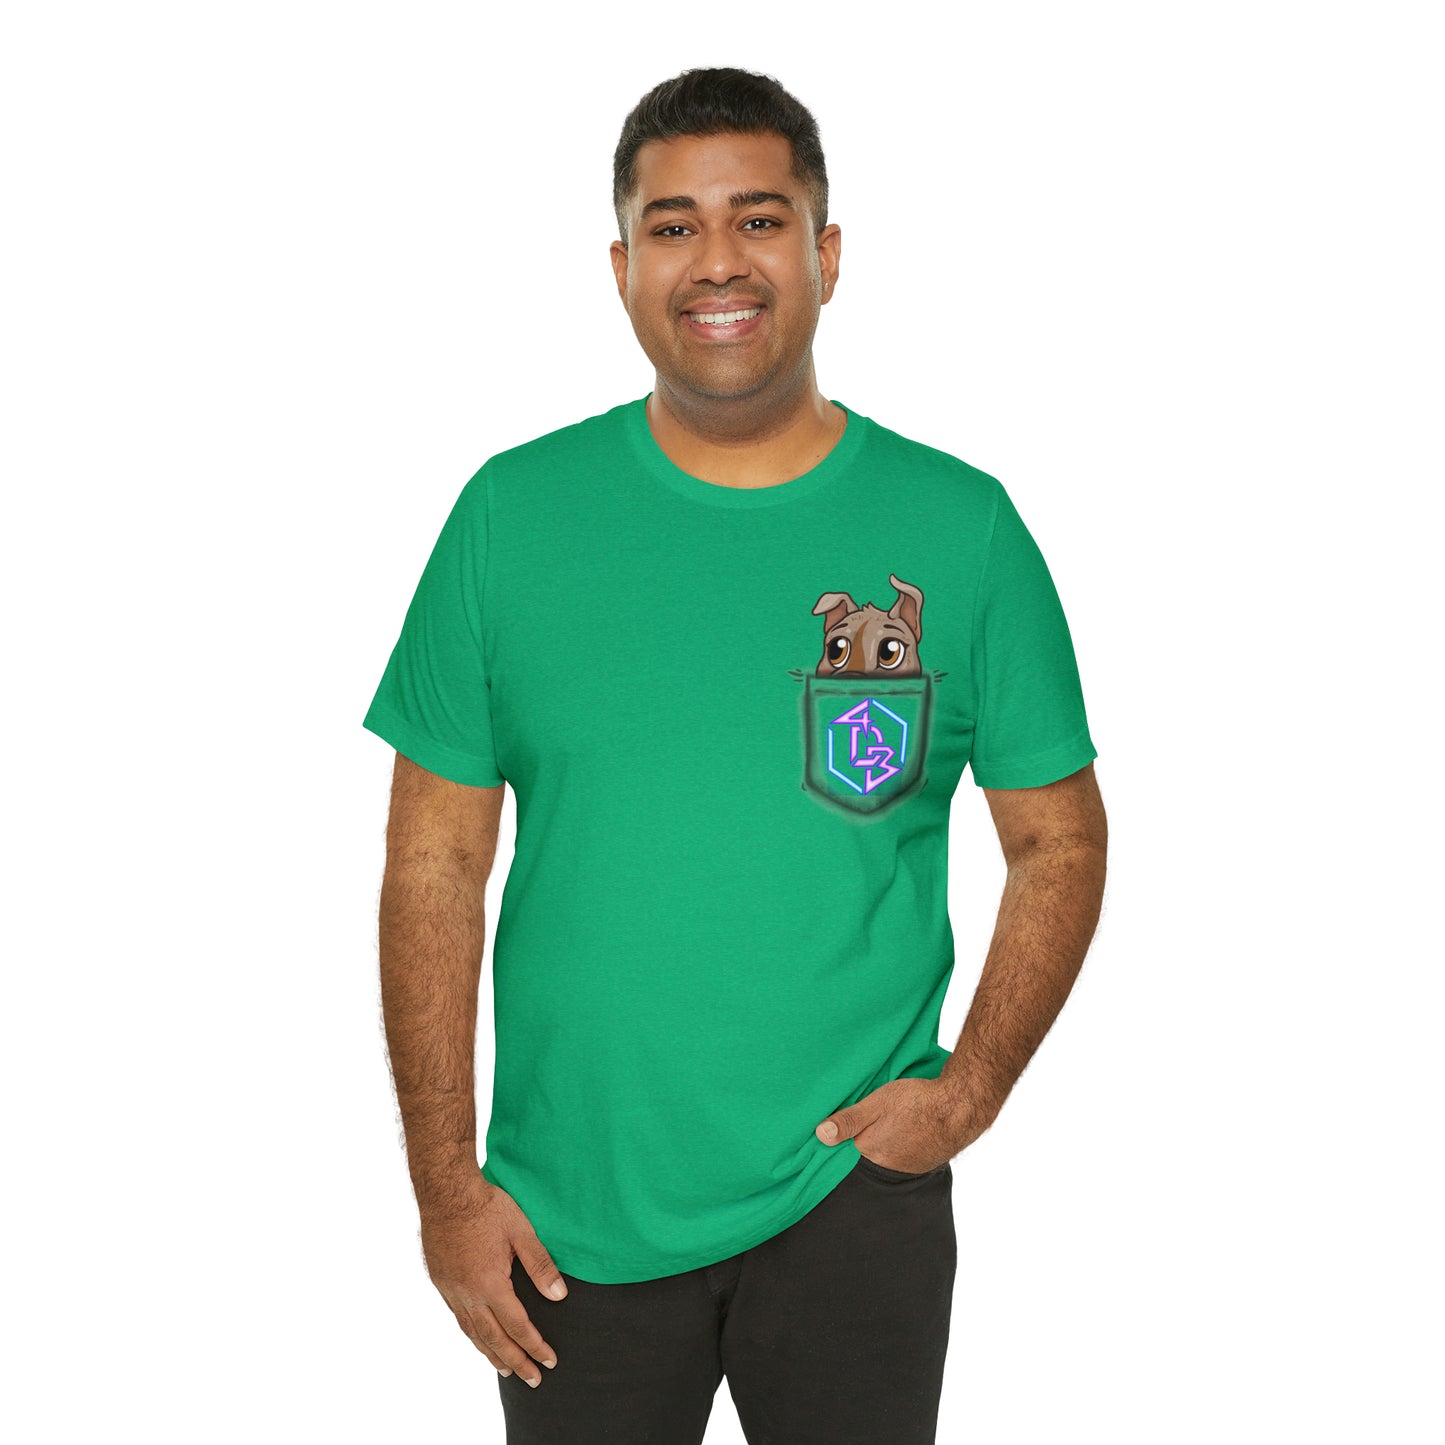 The Official 4DavidBlue Stream Shirt - Short Sleeve Tee (Multiple Color Options)